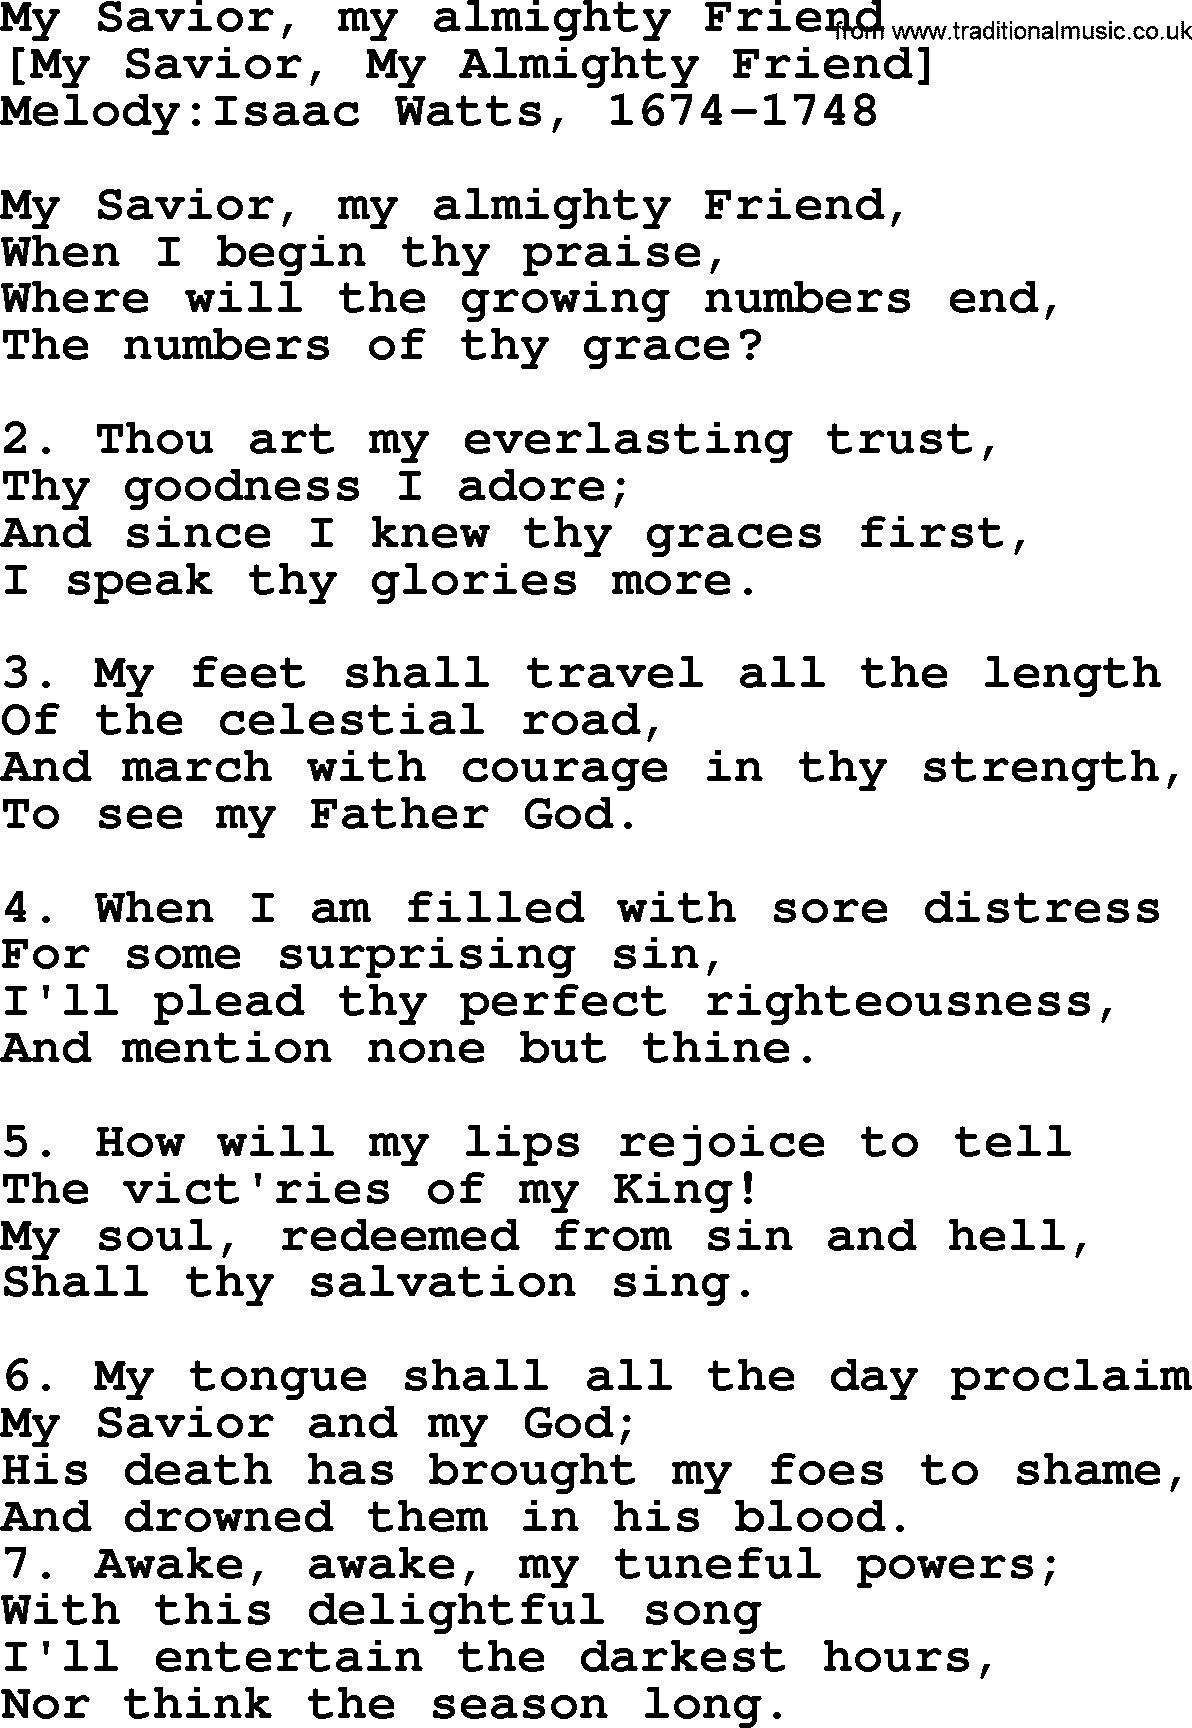 Old English Song: My Savior, My Almighty Friend lyrics